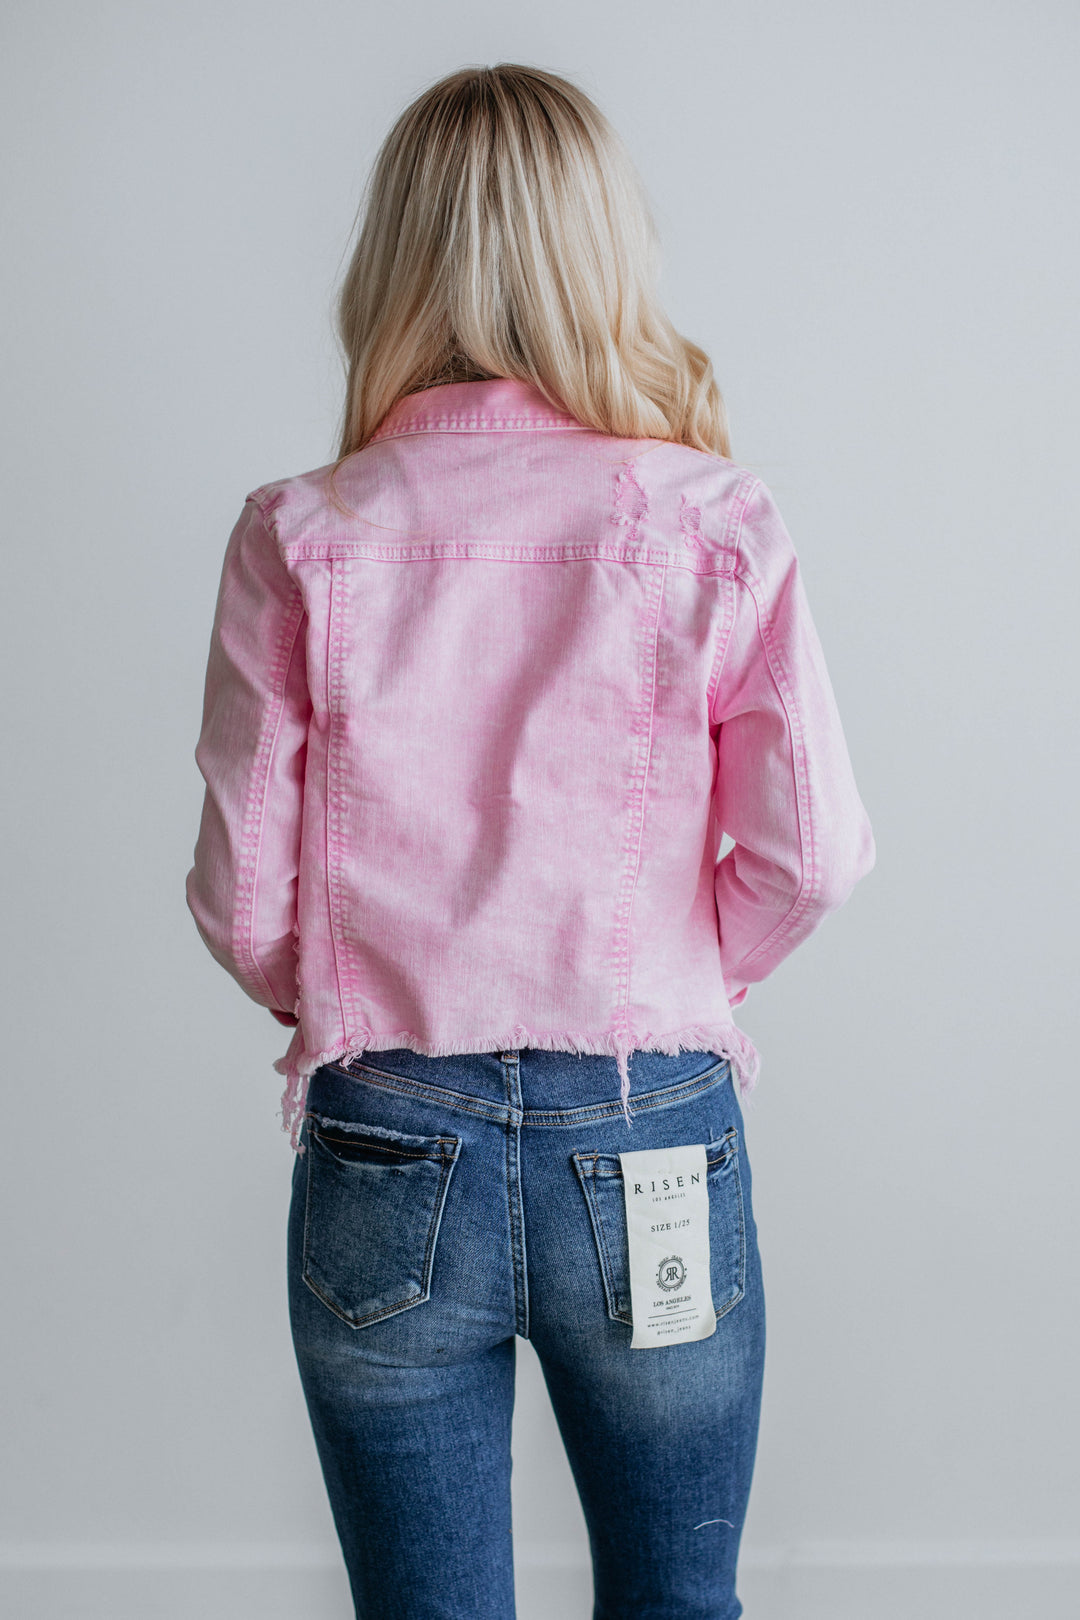 Gemma Risen Denim Jacket - Acid Pink